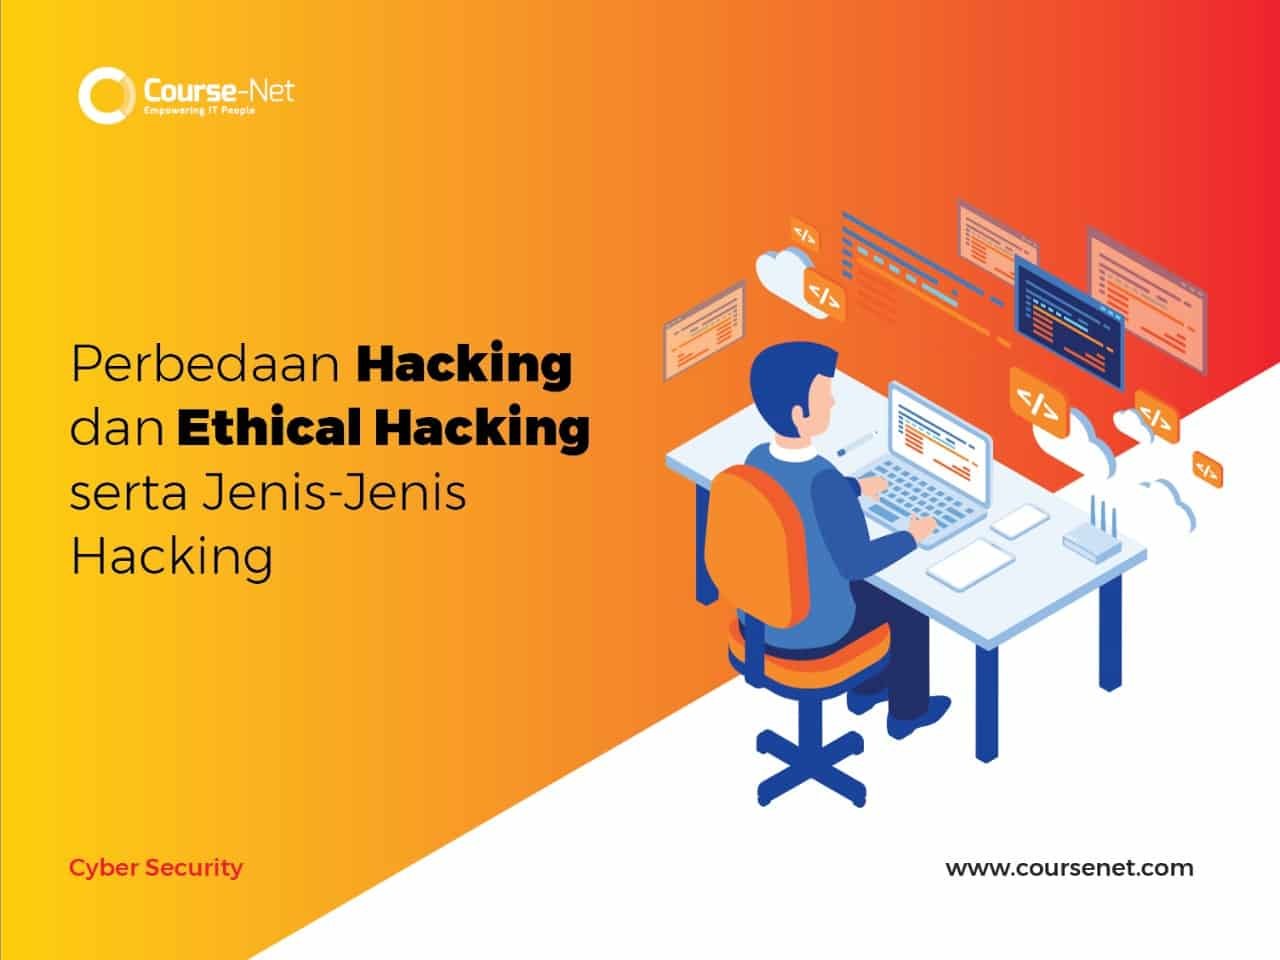 You are currently viewing Perbedaan Hacking dan Ethical Hacking serta Jenis-Jenis Hacking